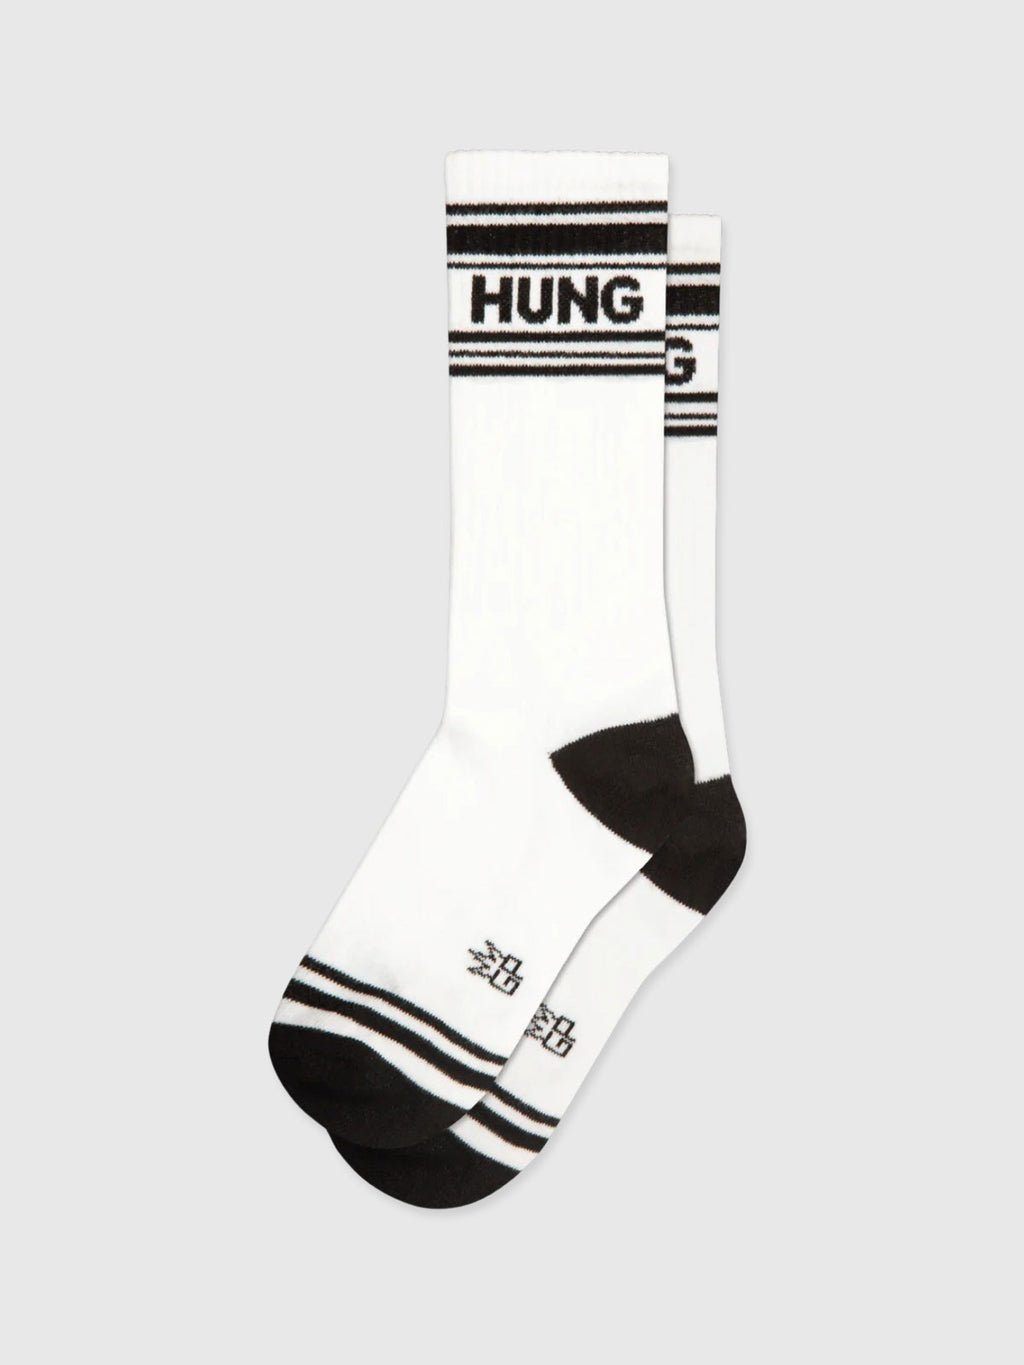 Gumball Poodle - Hung Socks